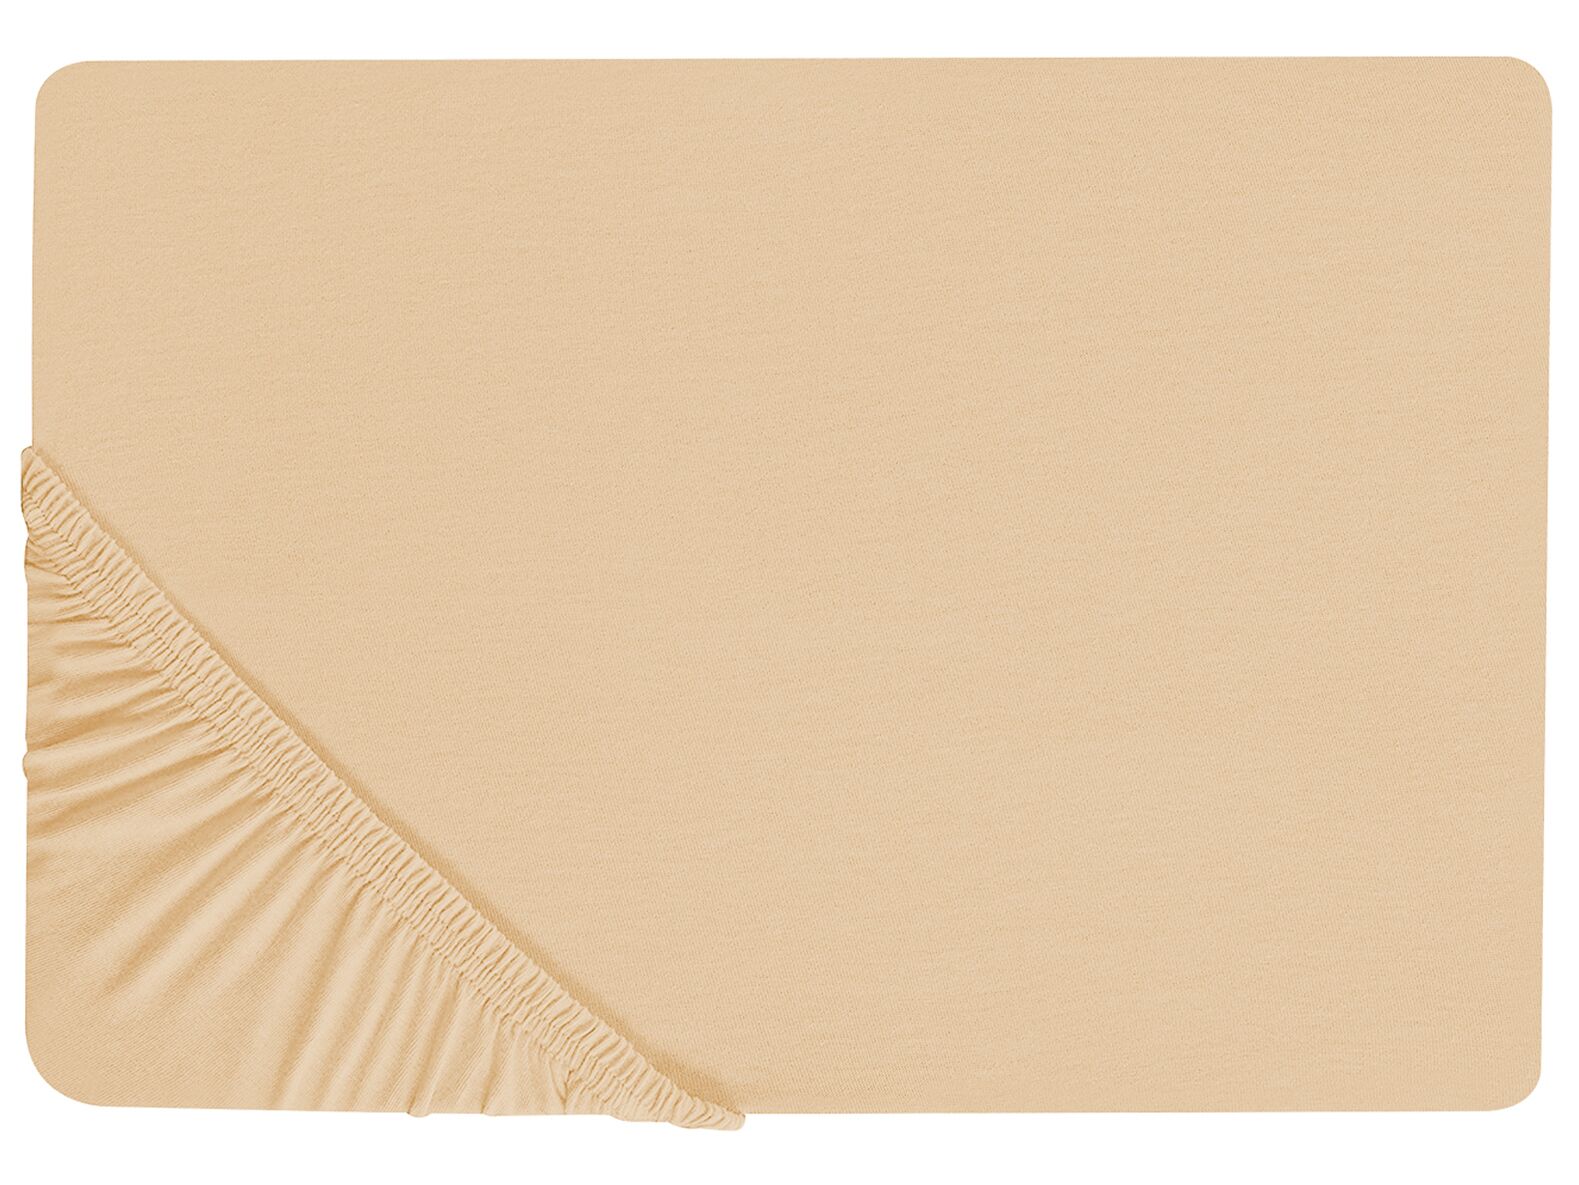 Cotton Fitted Sheet 160 x 200 cm Sand Beige JANBU_845947